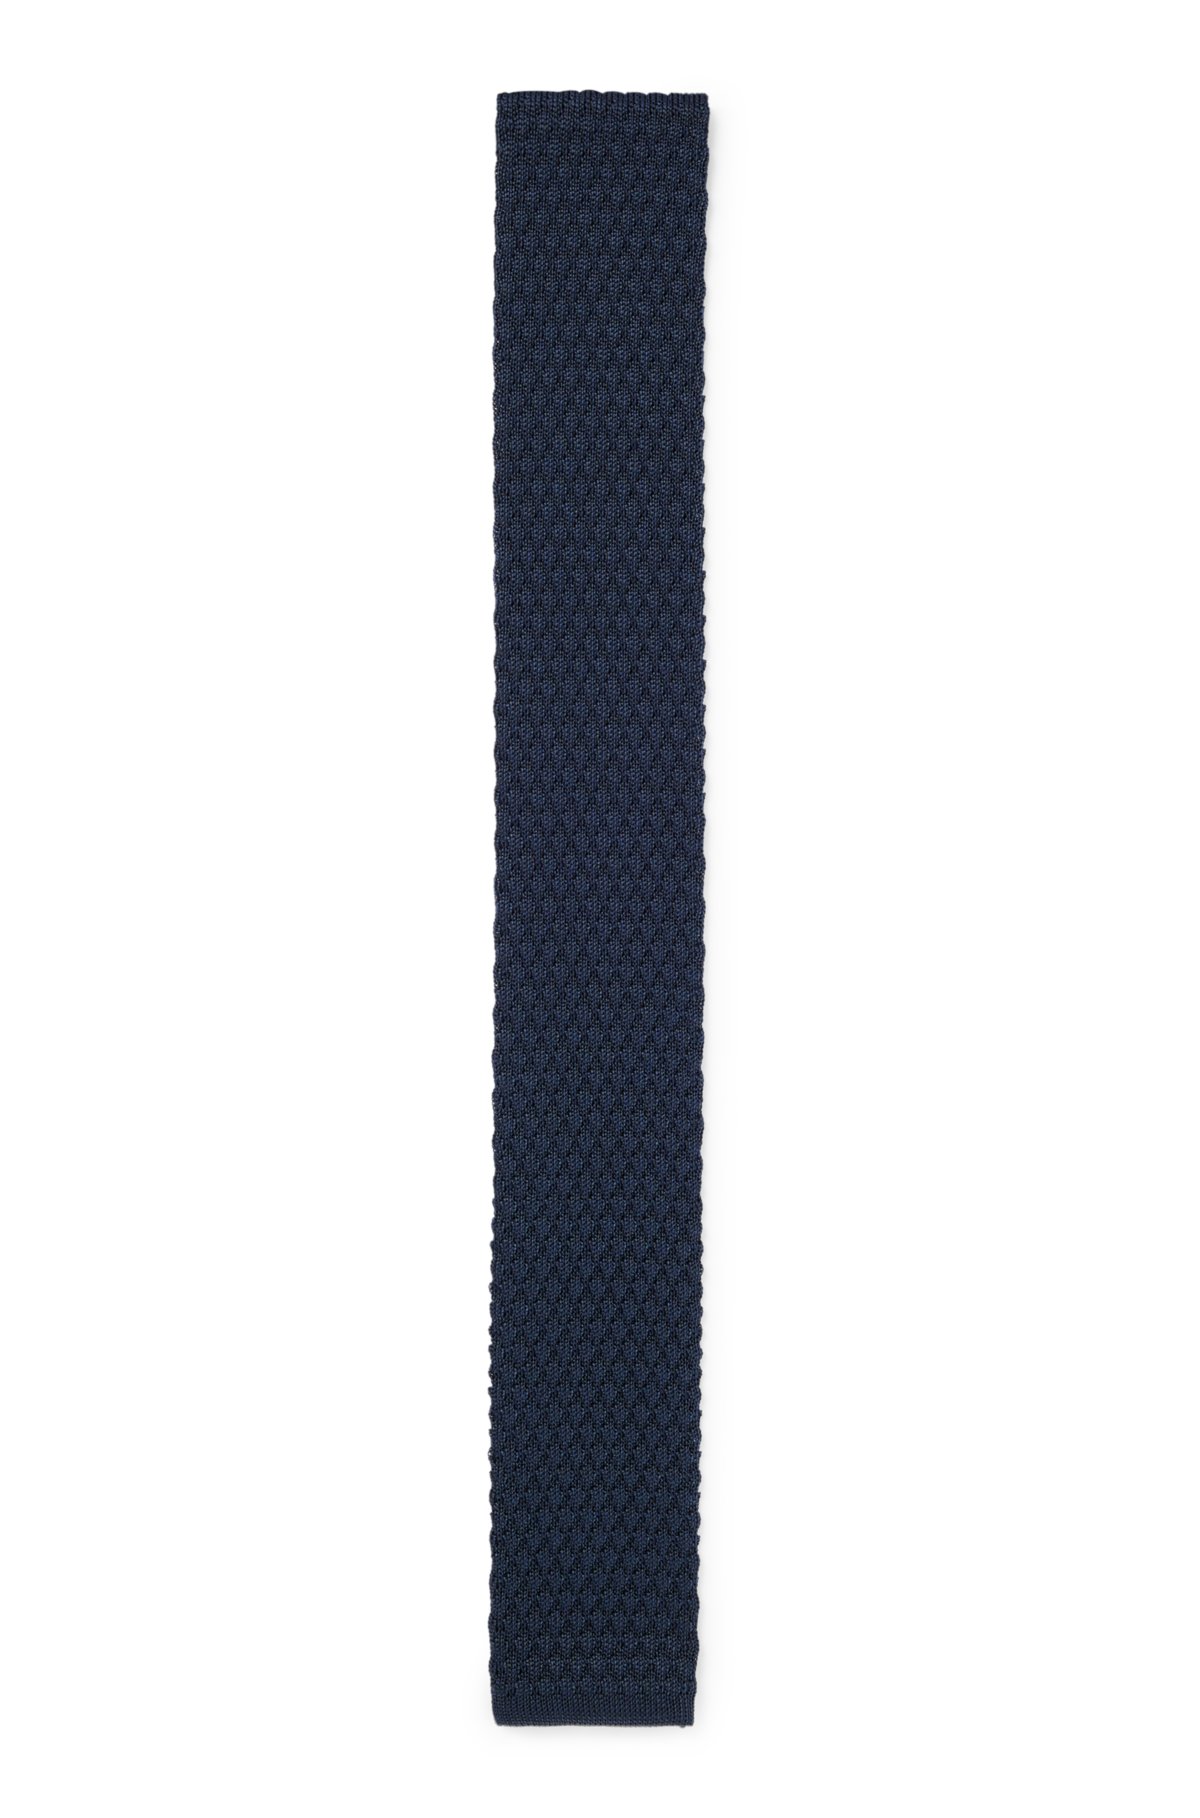 BOSS - Krawatte aus reiner Seide mit Jacquard-Struktur